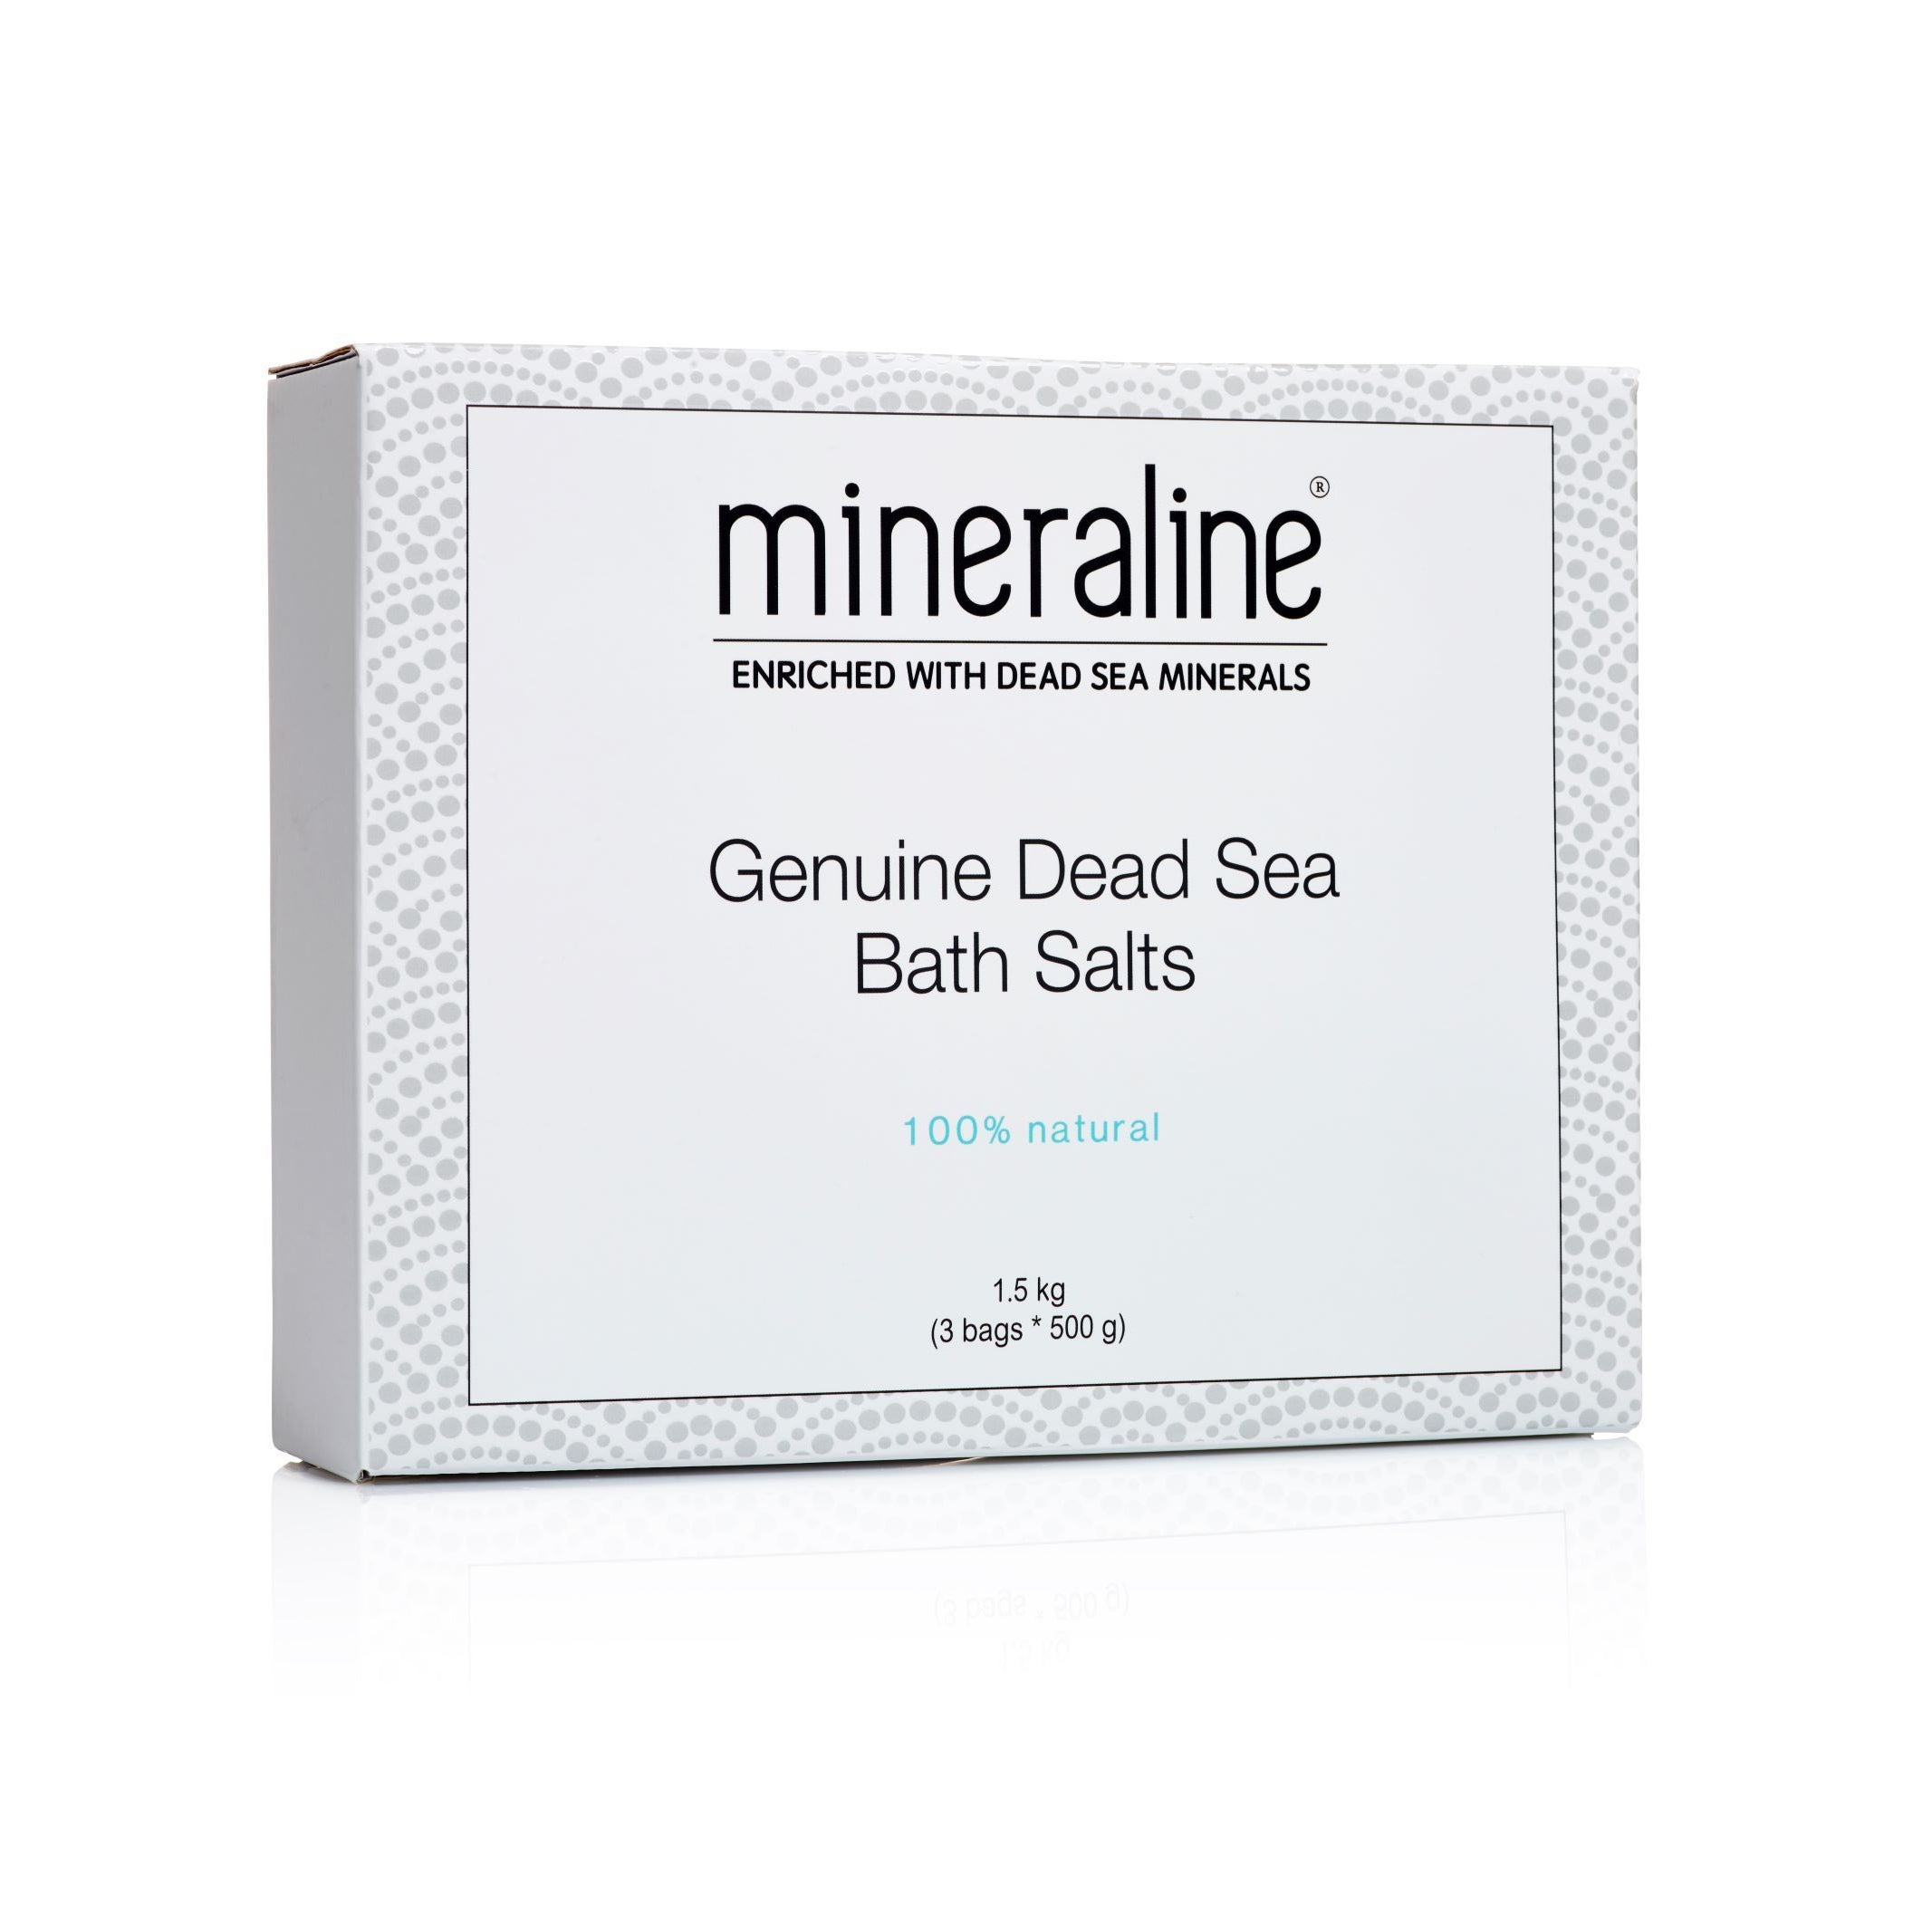 Mineraline Genuine Dead Sea Bath Salts